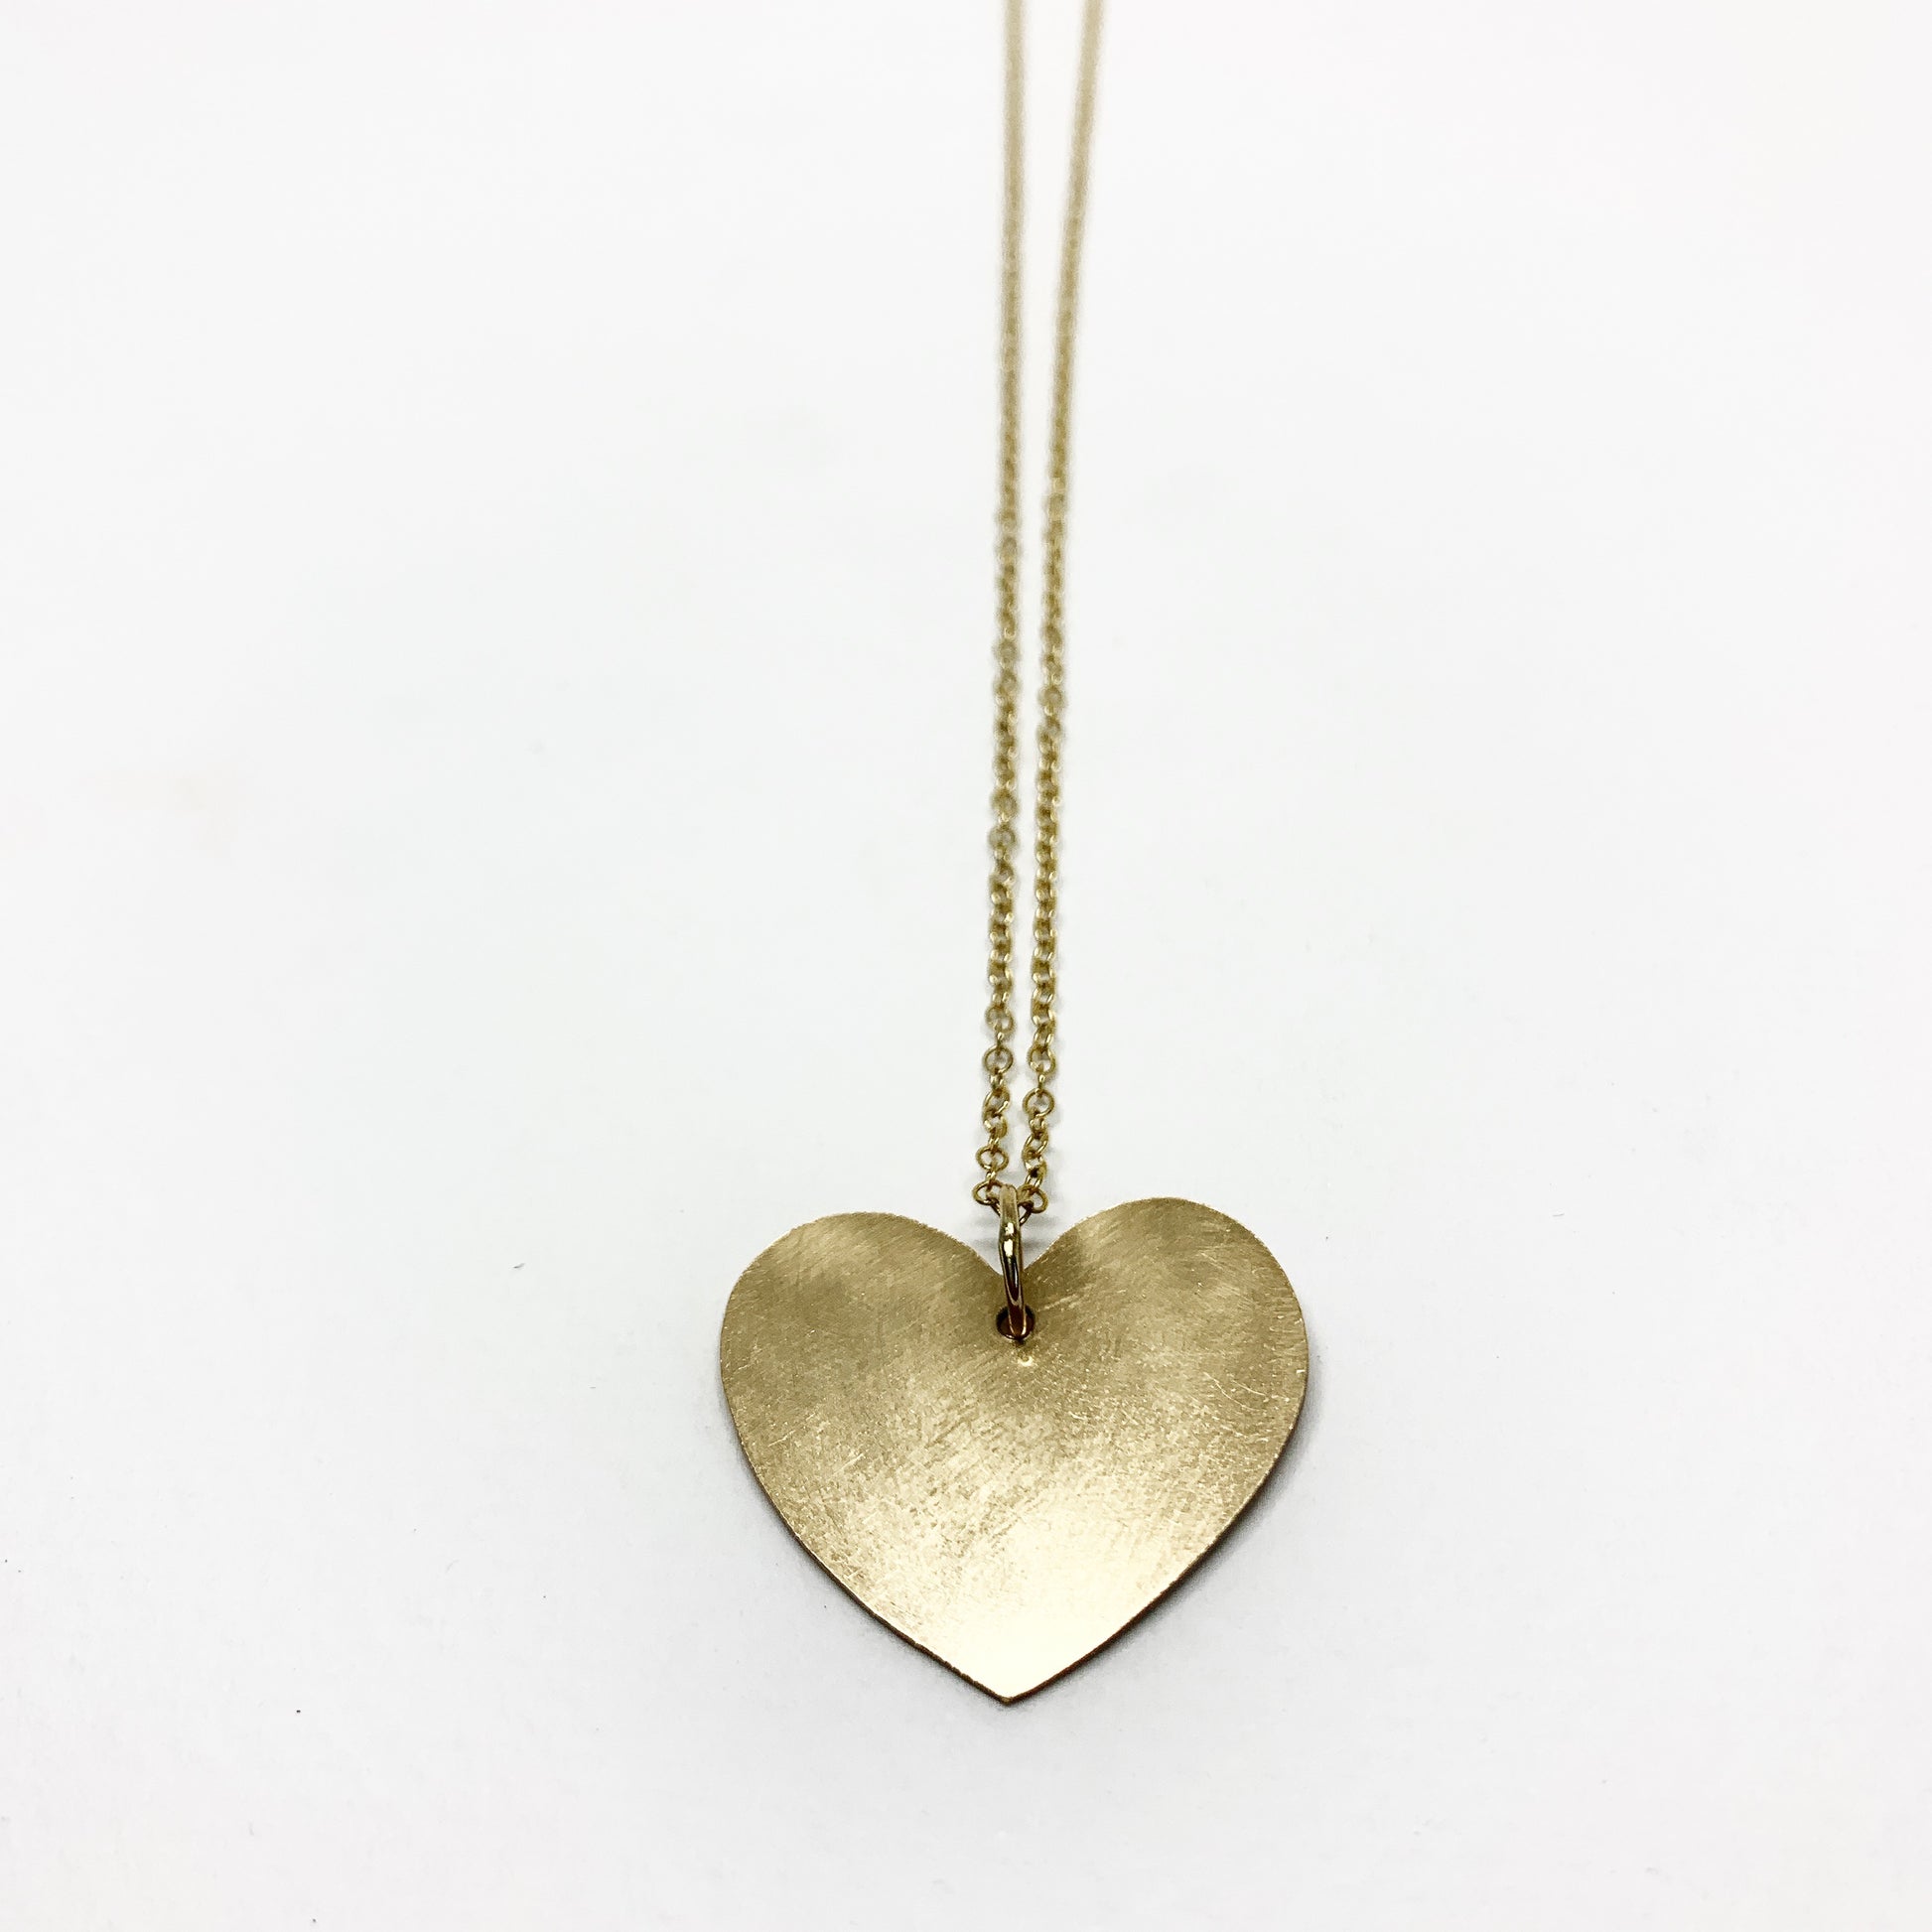 Love is Love - Heart Silhouette Necklace - Jennifer Cervelli Jewelry